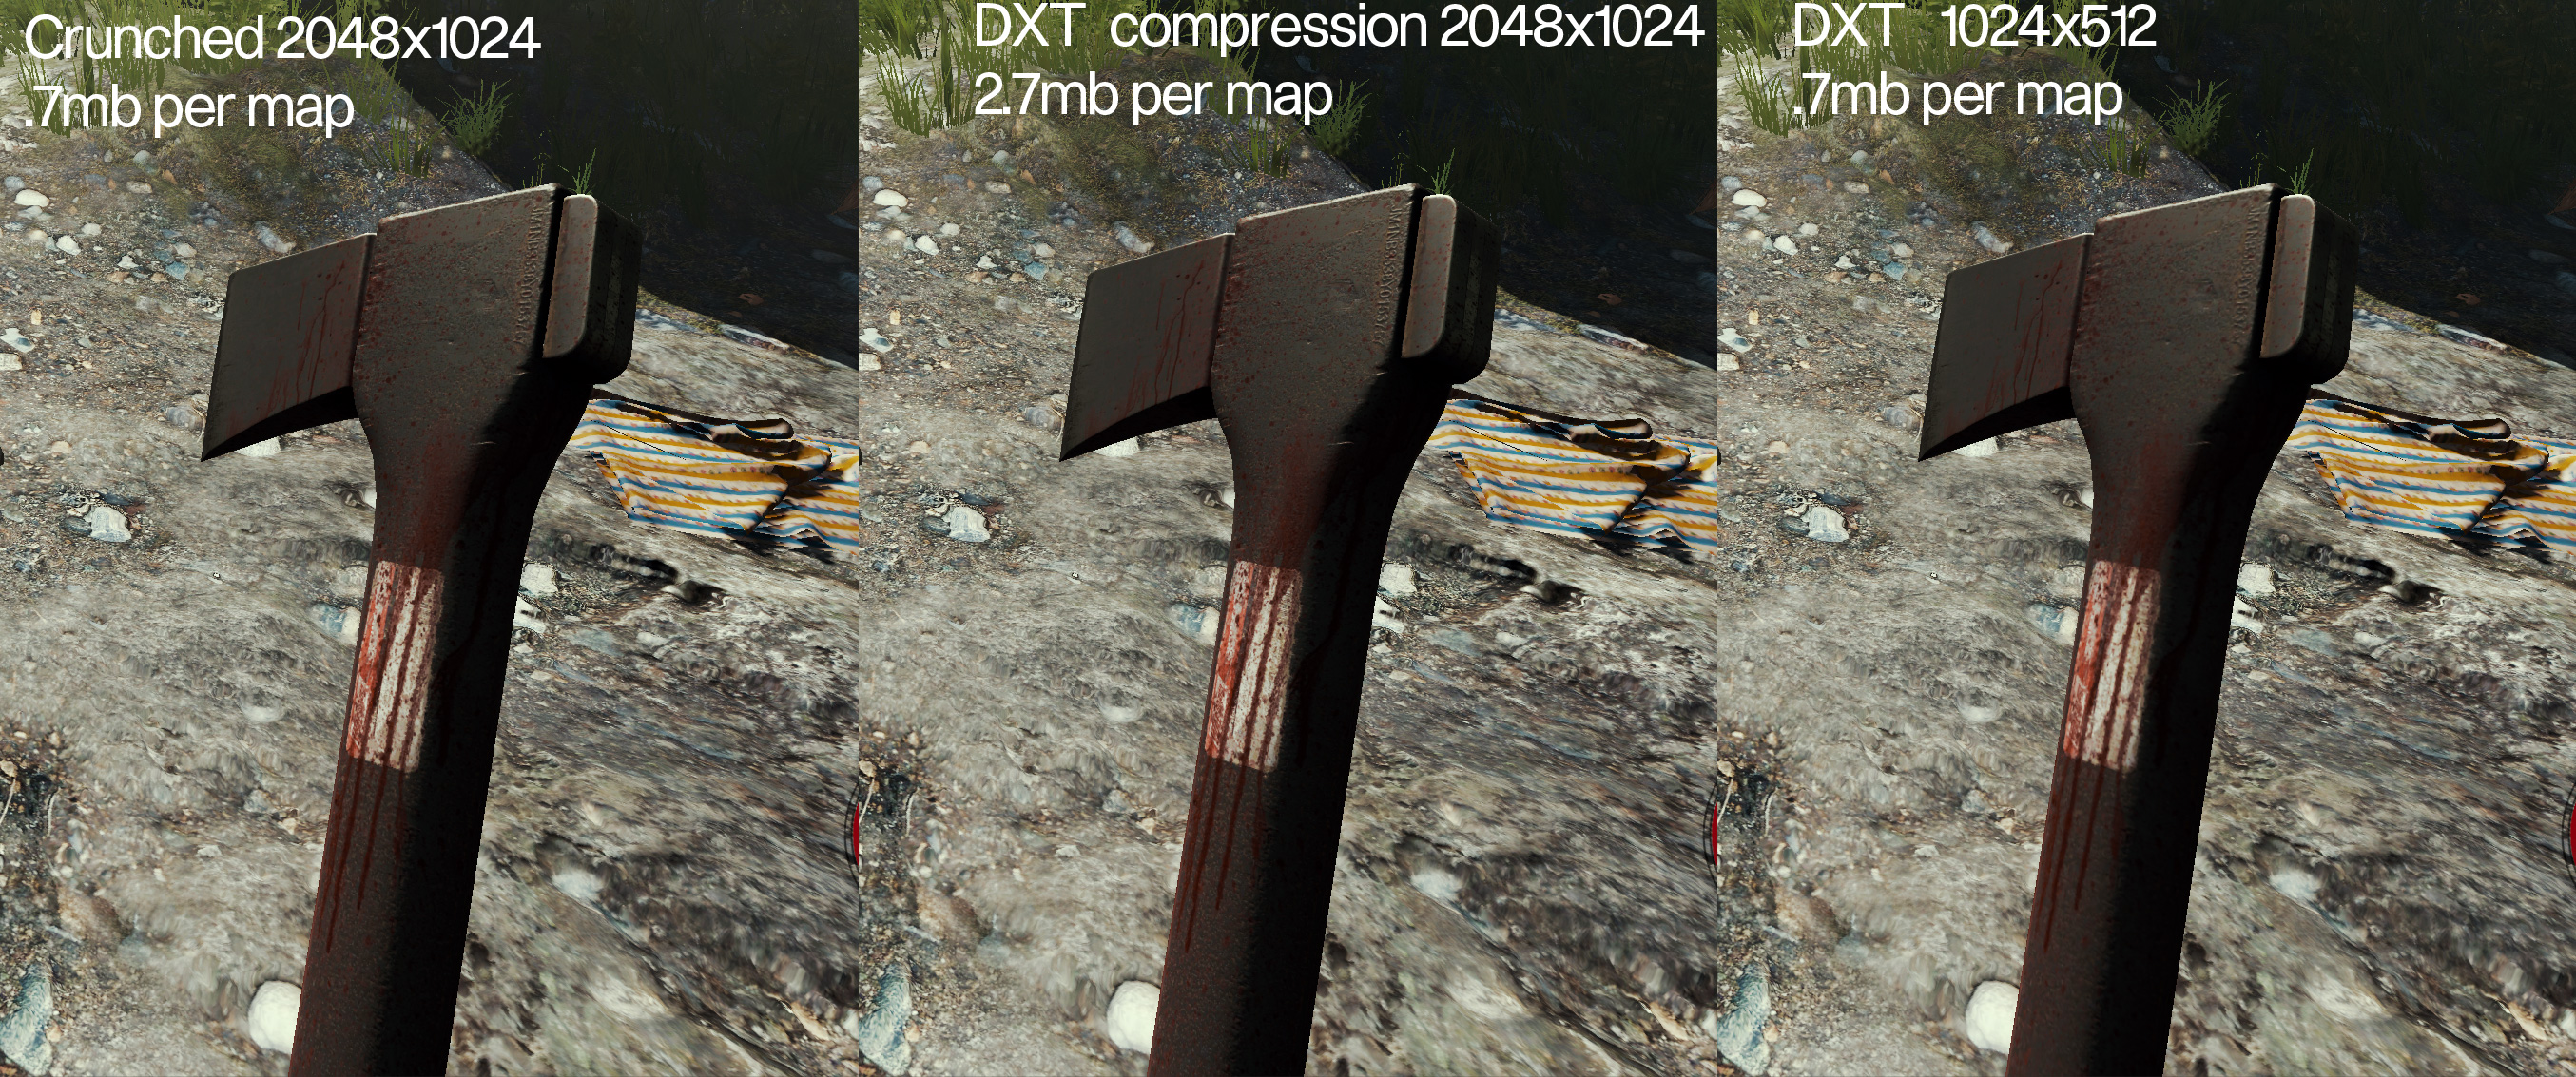 dxt texture compression